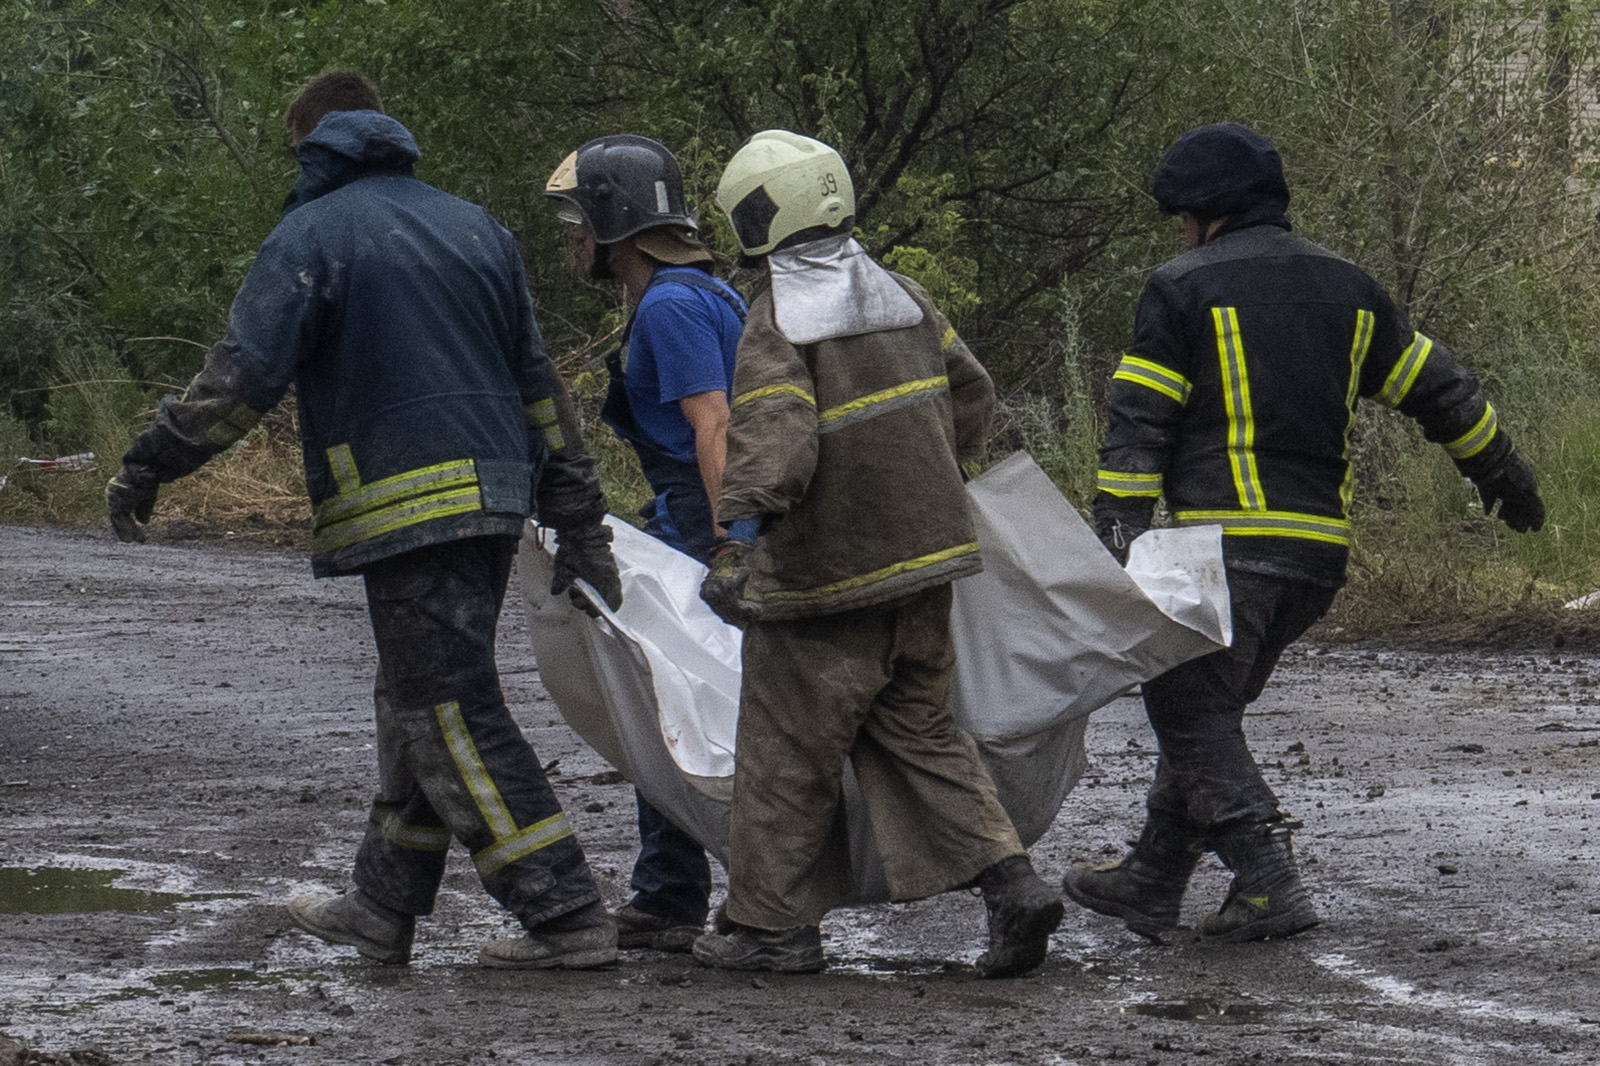 Ukrainian emergency workers carry the lifeless body of a victim found under rubble in Chasiv Yar, Donetsk region, eastern Ukraine, on July 11.